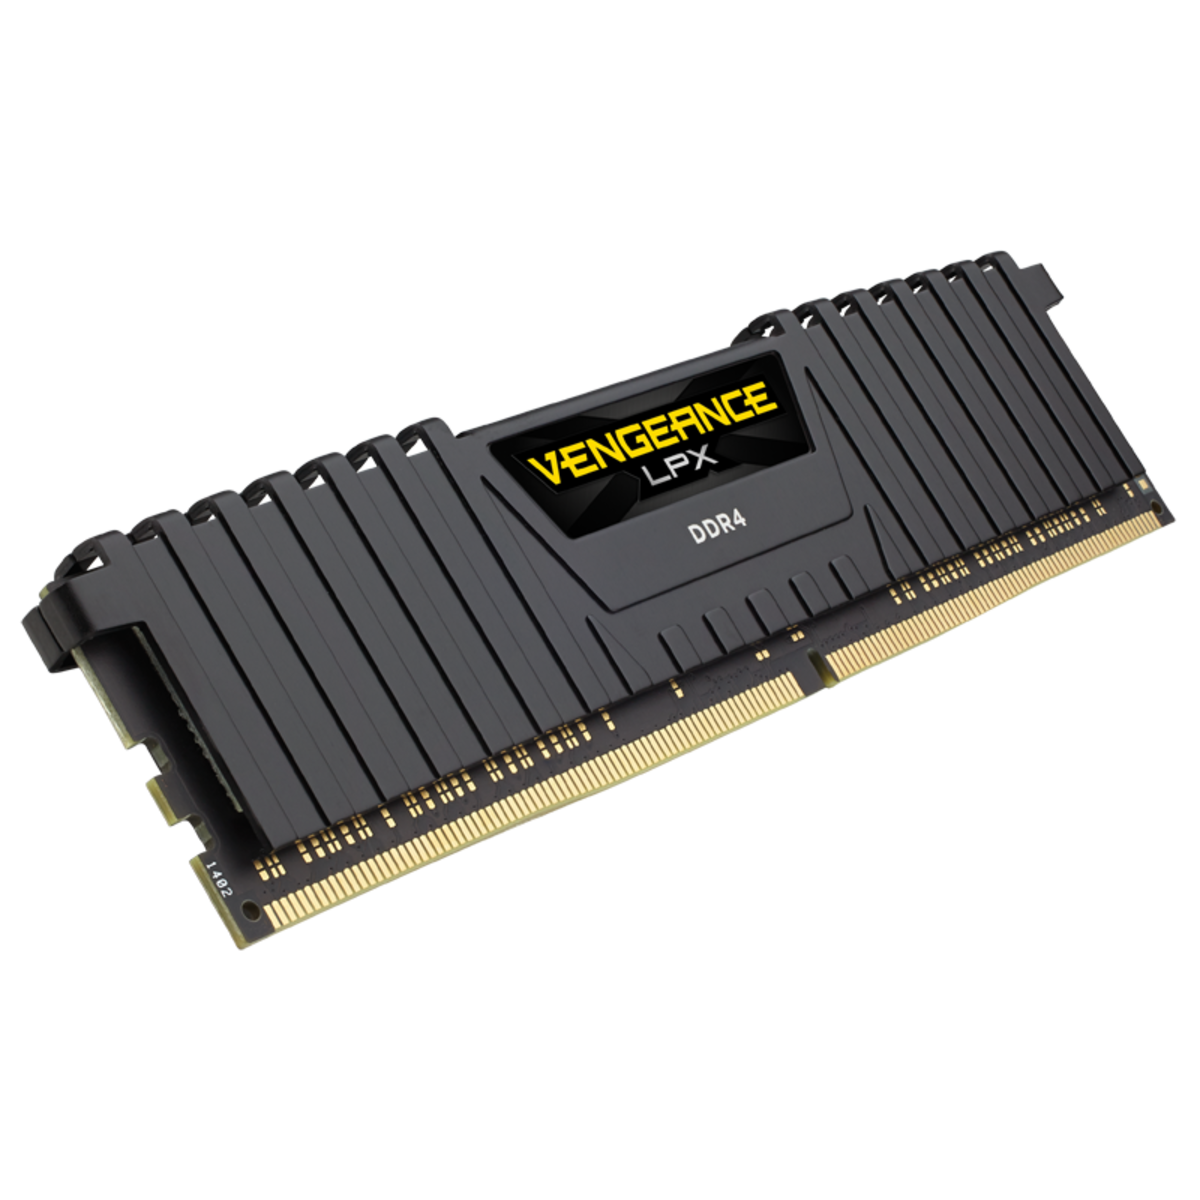 CORSAIR VENGEANCE LPX 8GB( 8GB*1) 3200MHz DDR4 MEMORY